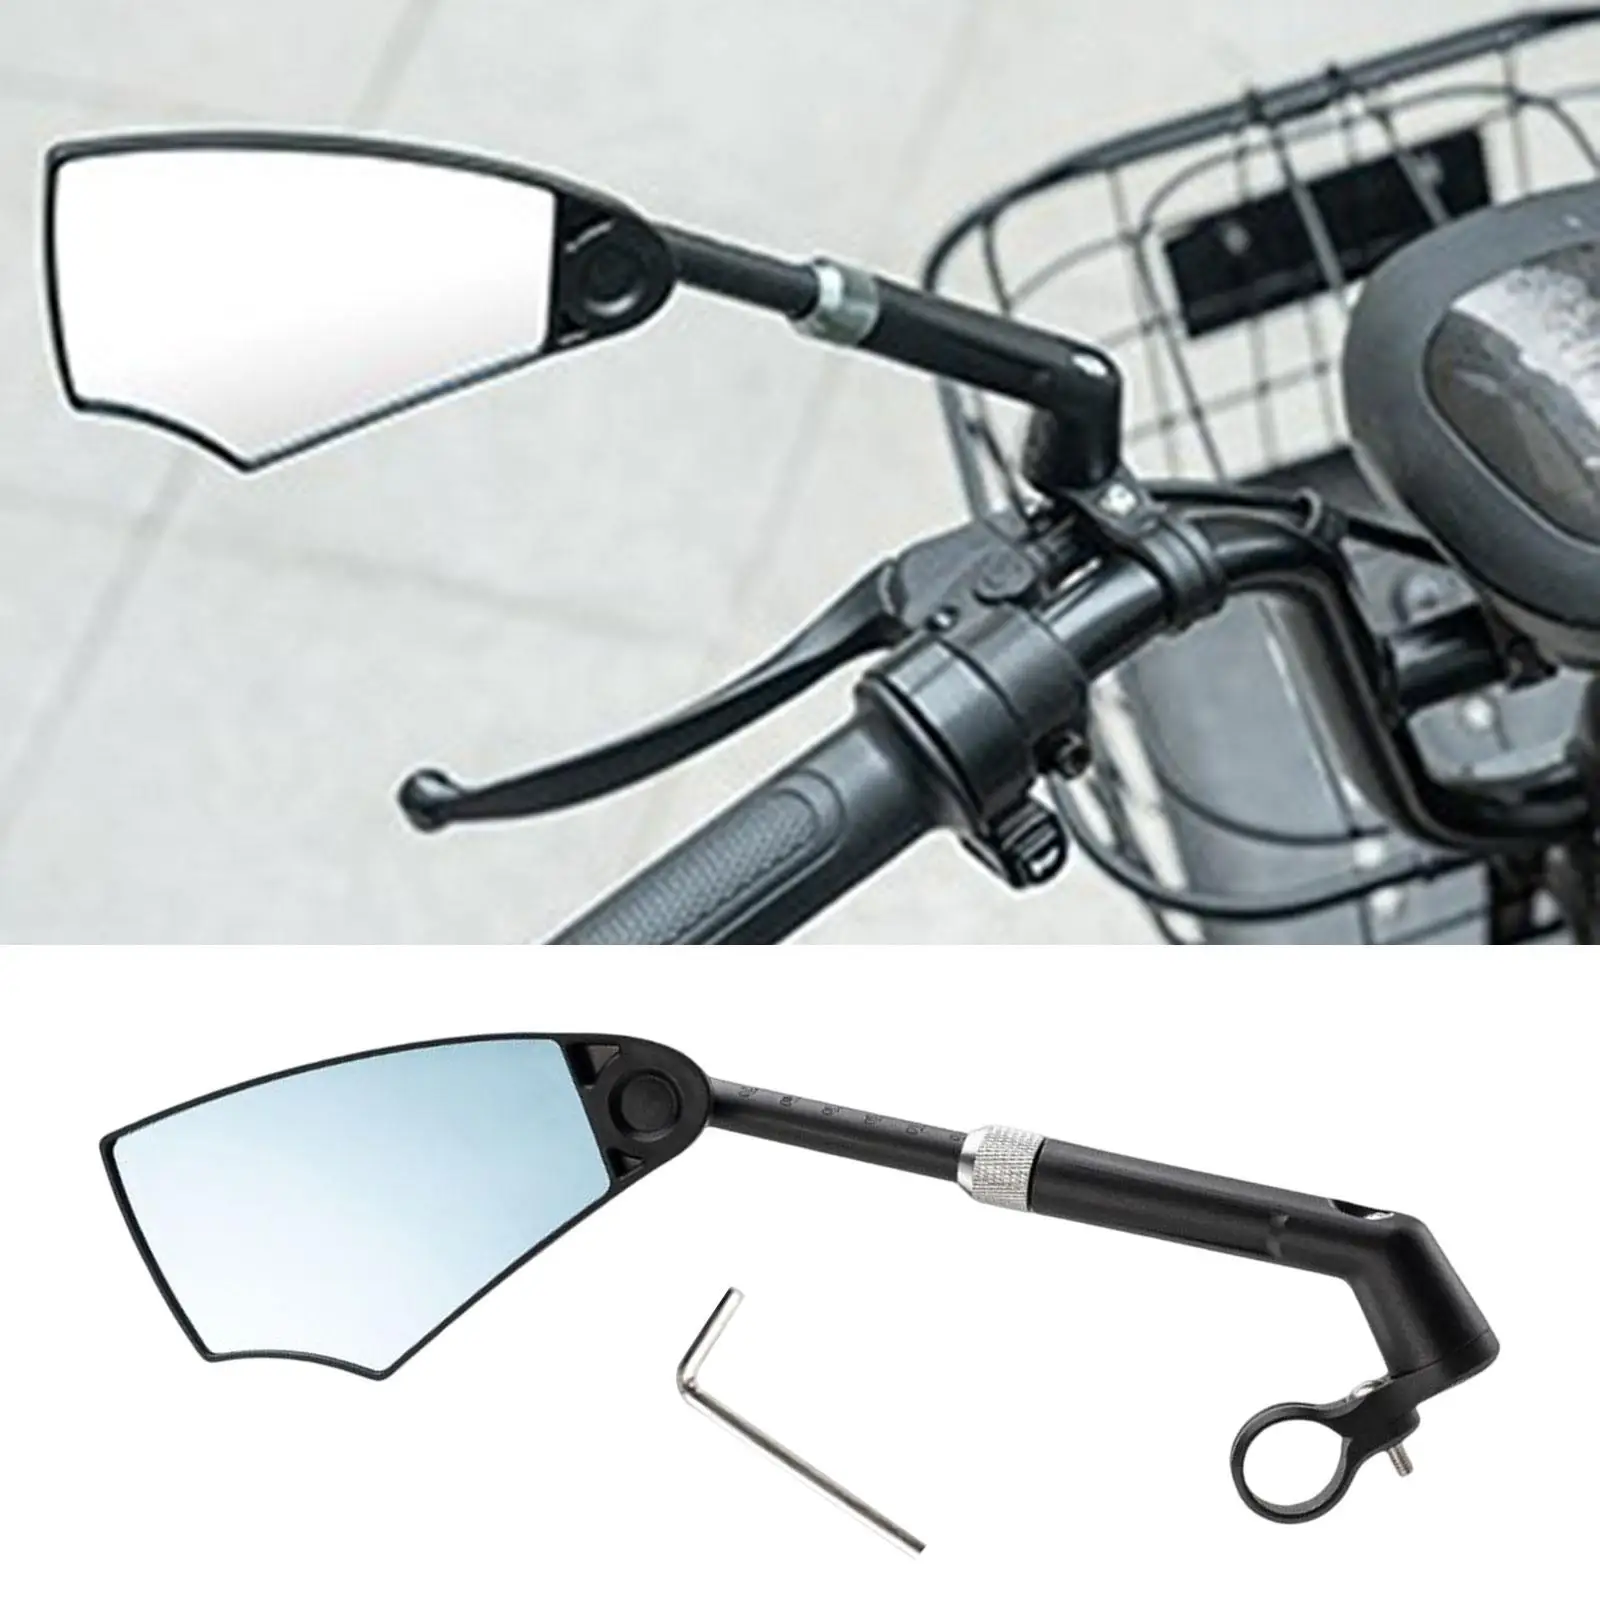 Bike Rear View Mirror Handlebar Accessories Adjustable Bike Mirror Bike Rear View Mirrors for Motorcycle Riding Electric Bike